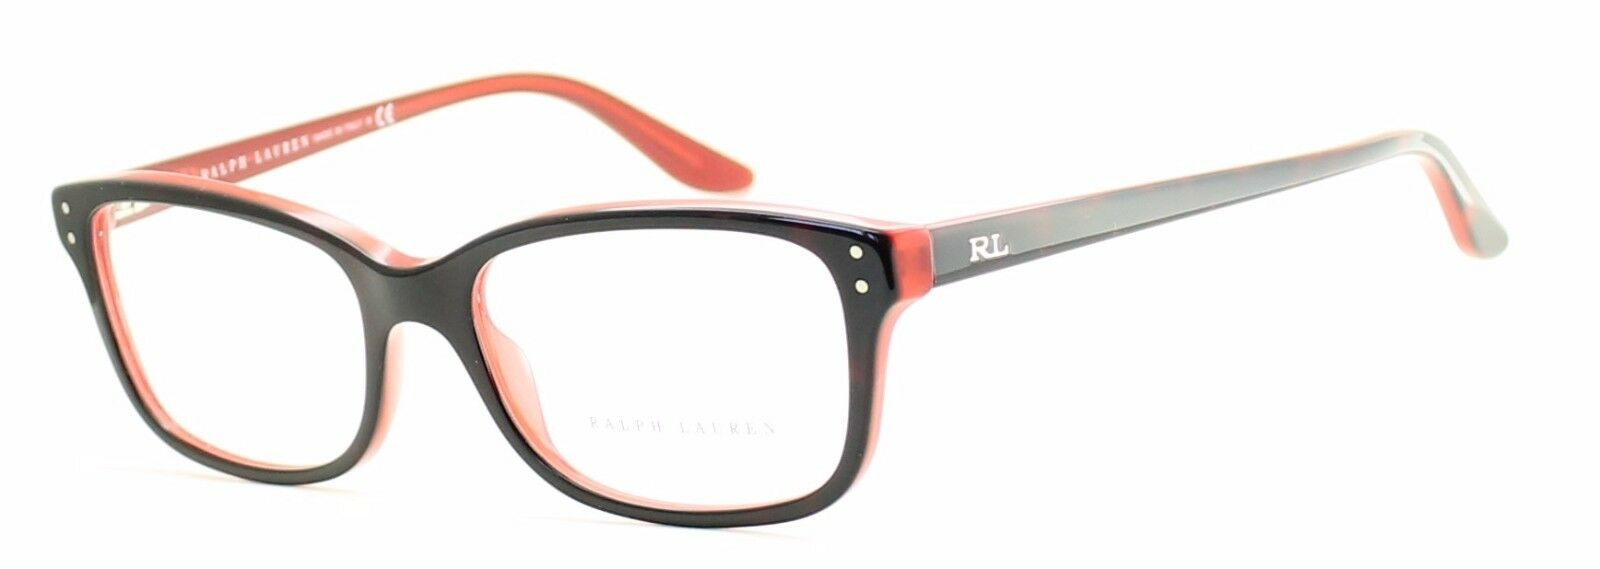 RALPH LAUREN RL6062 5255 52mm RX Optical Eyewear FRAMES Eyeglasses Glasses - New